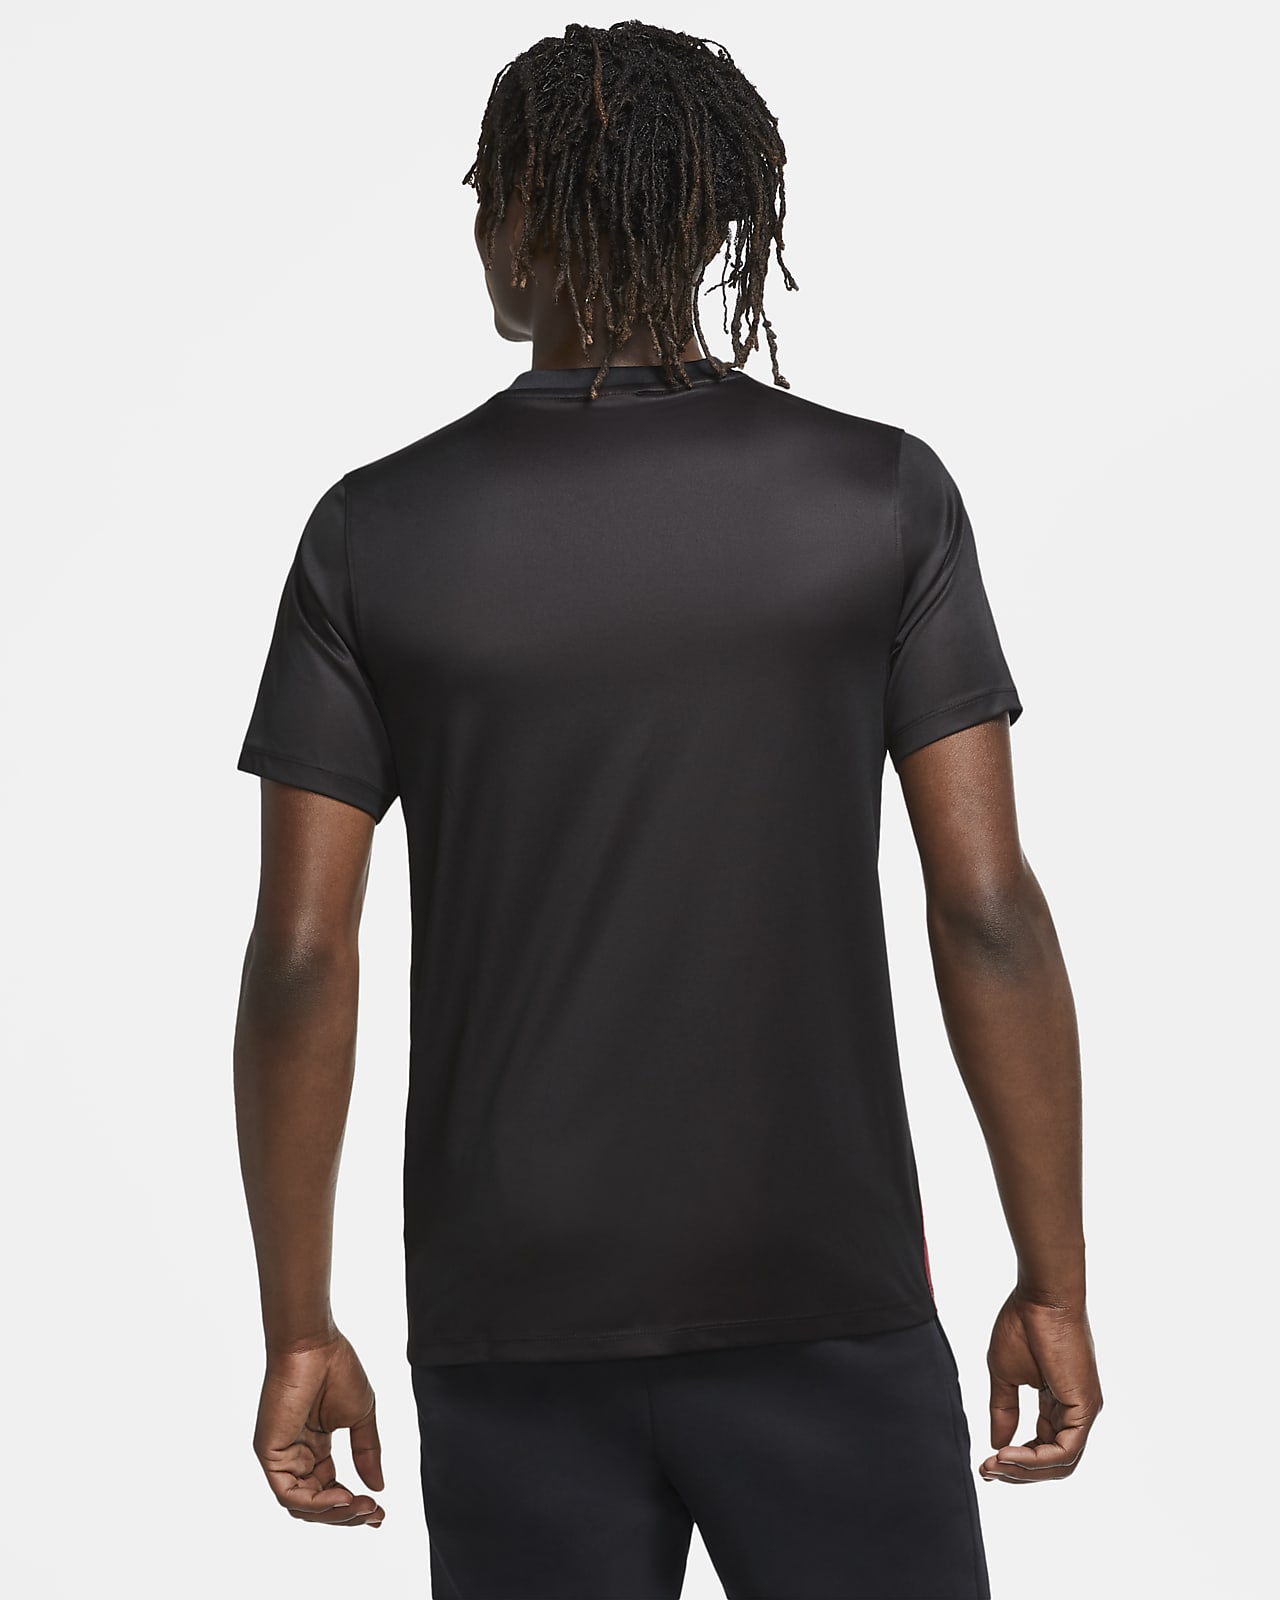 Galatasaray 2020-21 Nike Away Shirt | 20/21 Kits | Football shirt blog